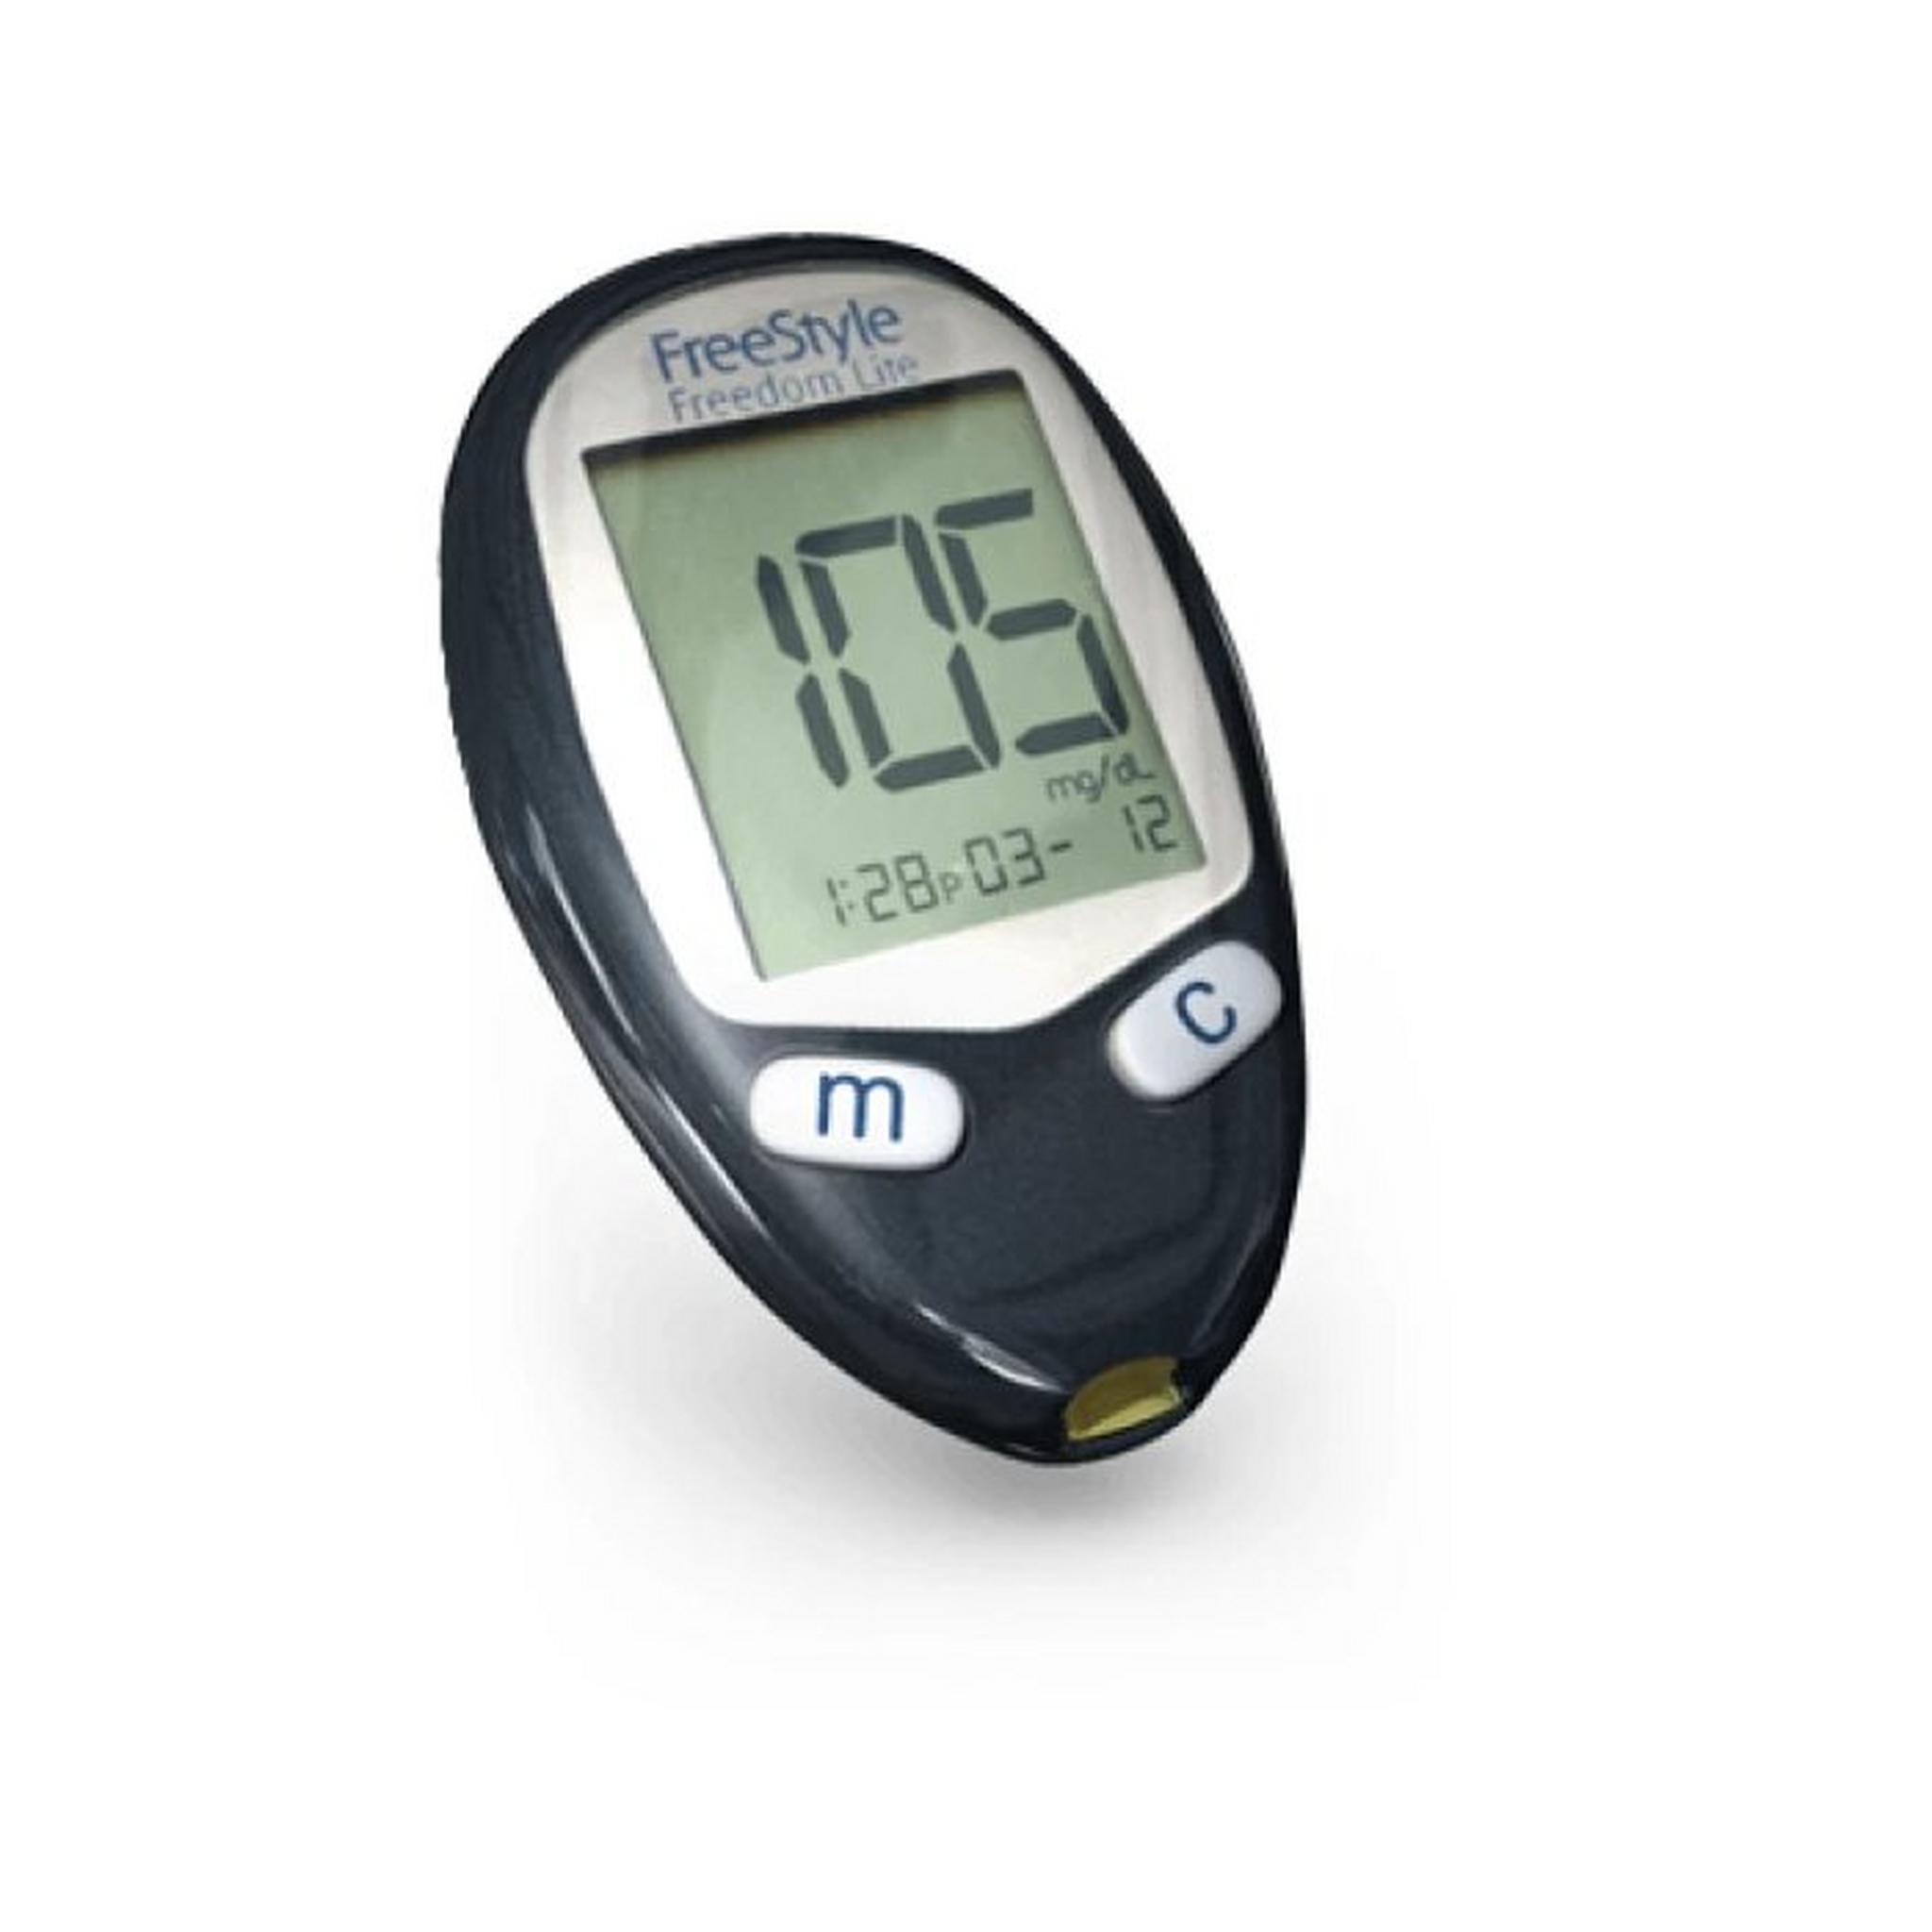 Omron RS2 Digital Wrist Blood Pressure Monitor + Micro Air U100 Mesh Nebulizer + Freestyle Glucometer Monitor Bundle, NEU100E+HEM6161E+7108770